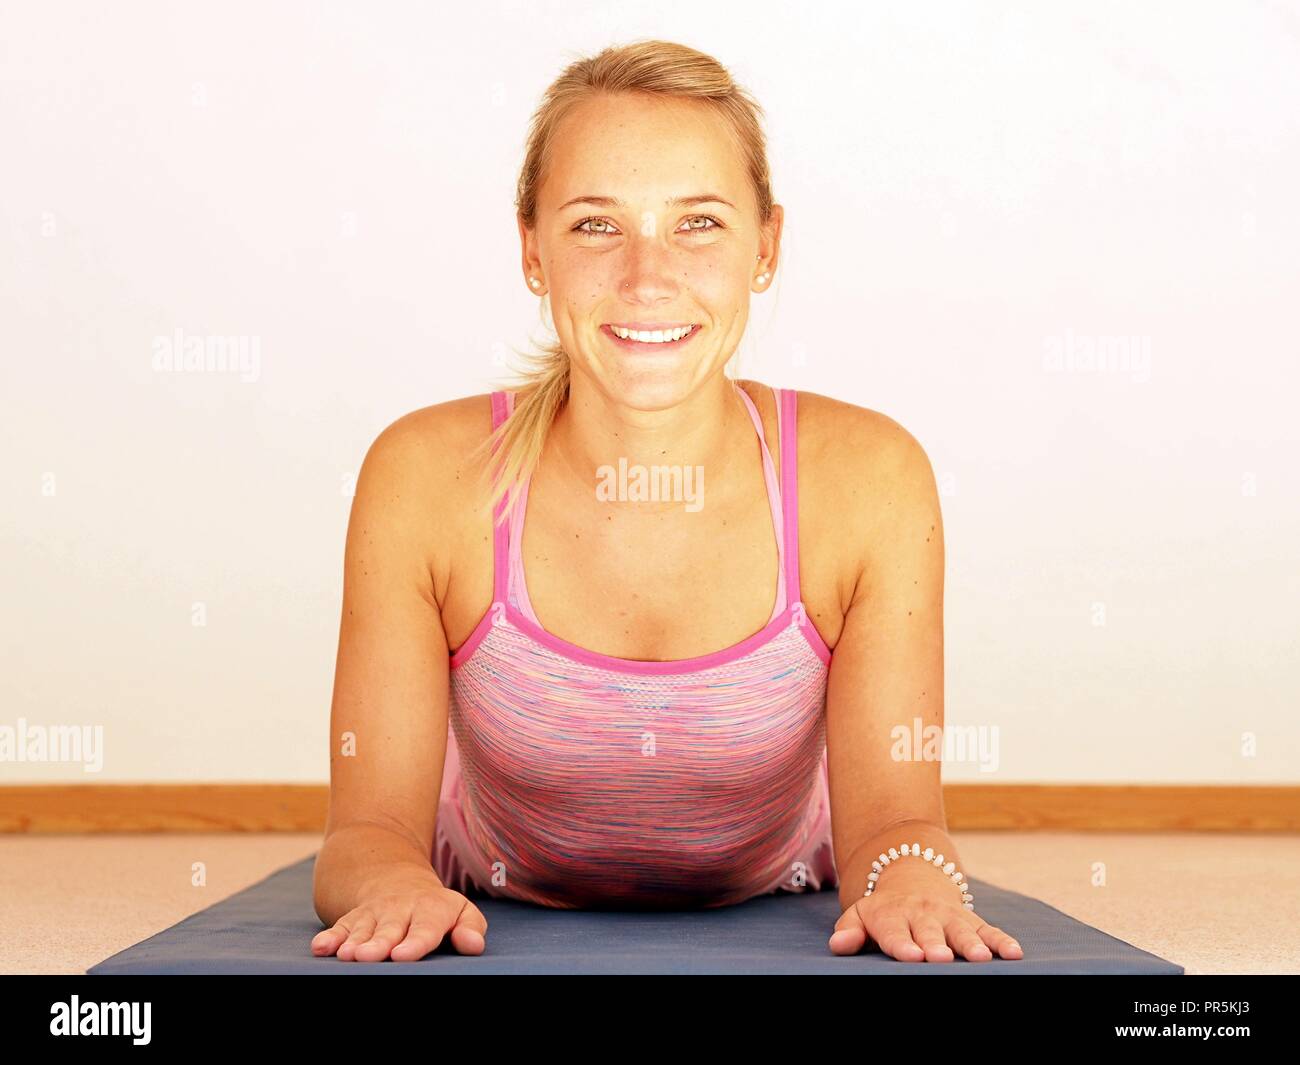 Beautiful young woman doing yoga asanas in pinke sports outfit. Stock Photo